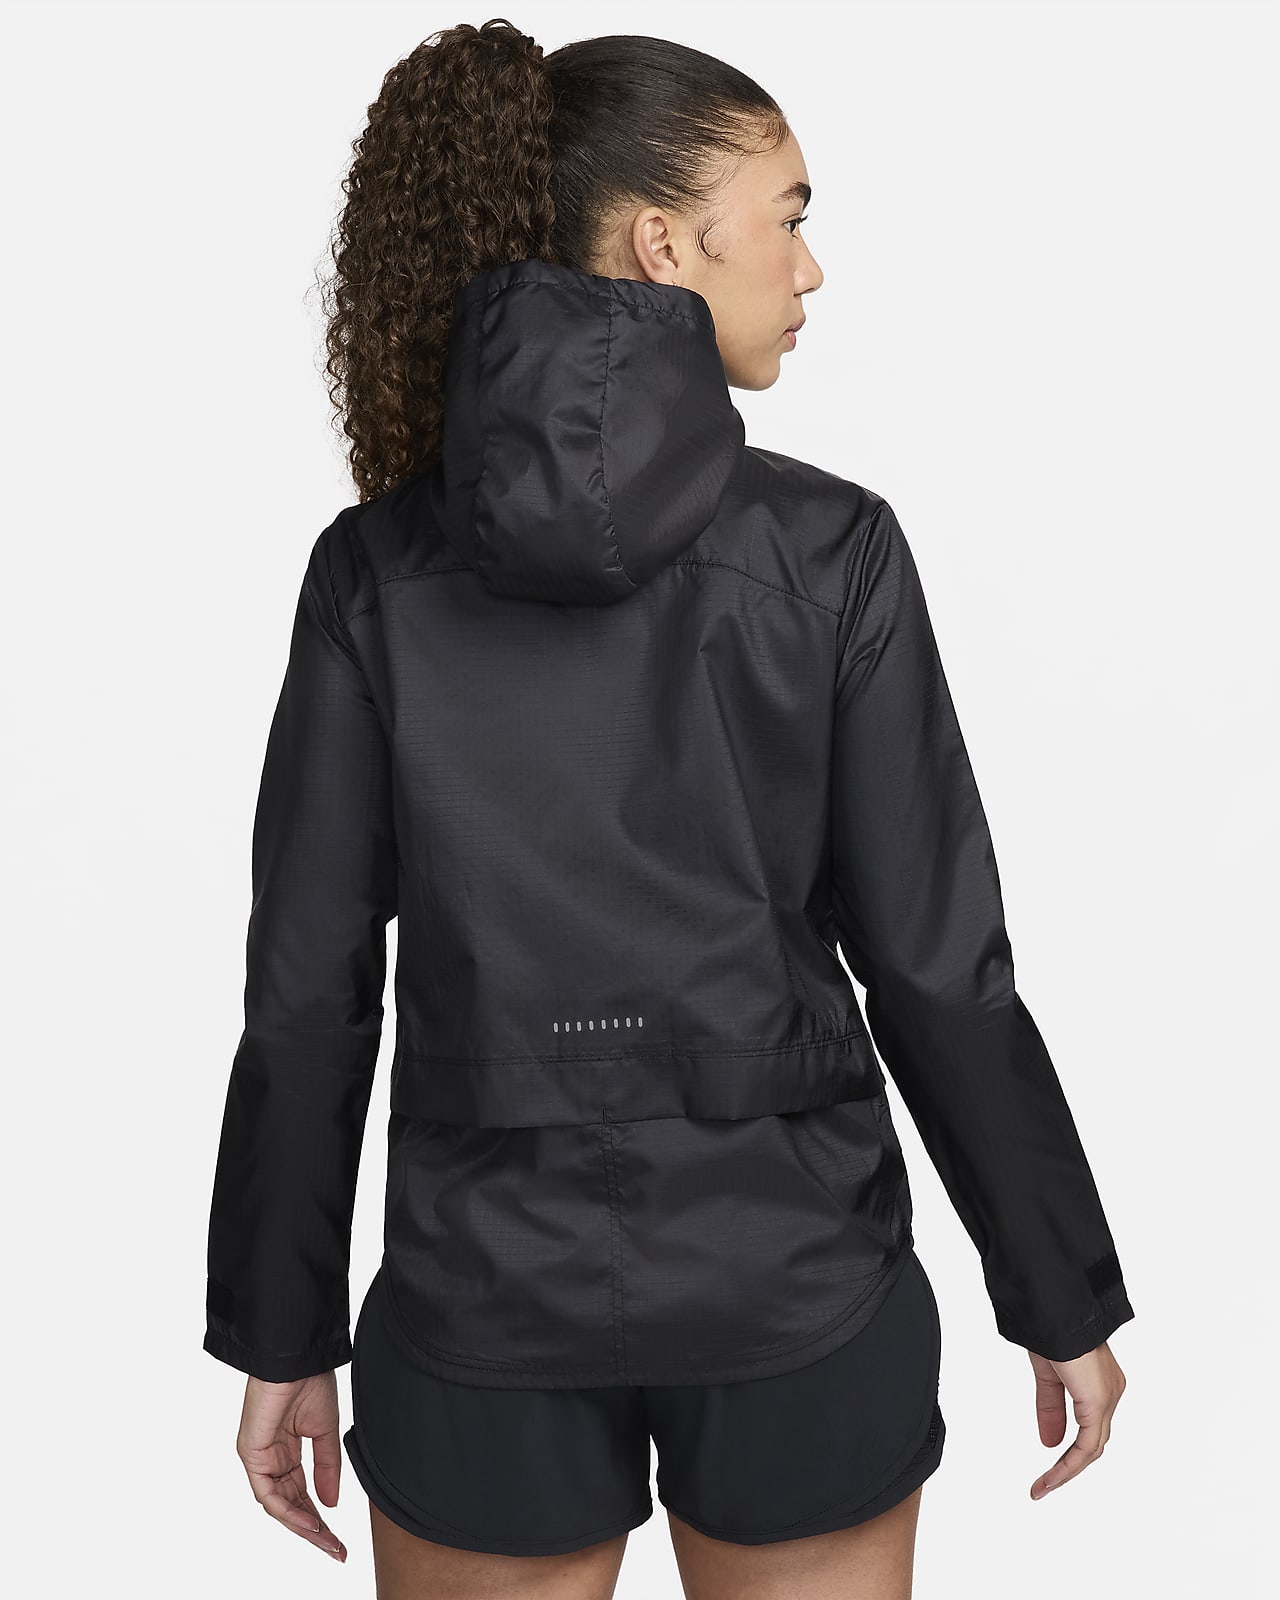 Nike Women\'s Jacket. Essential Running